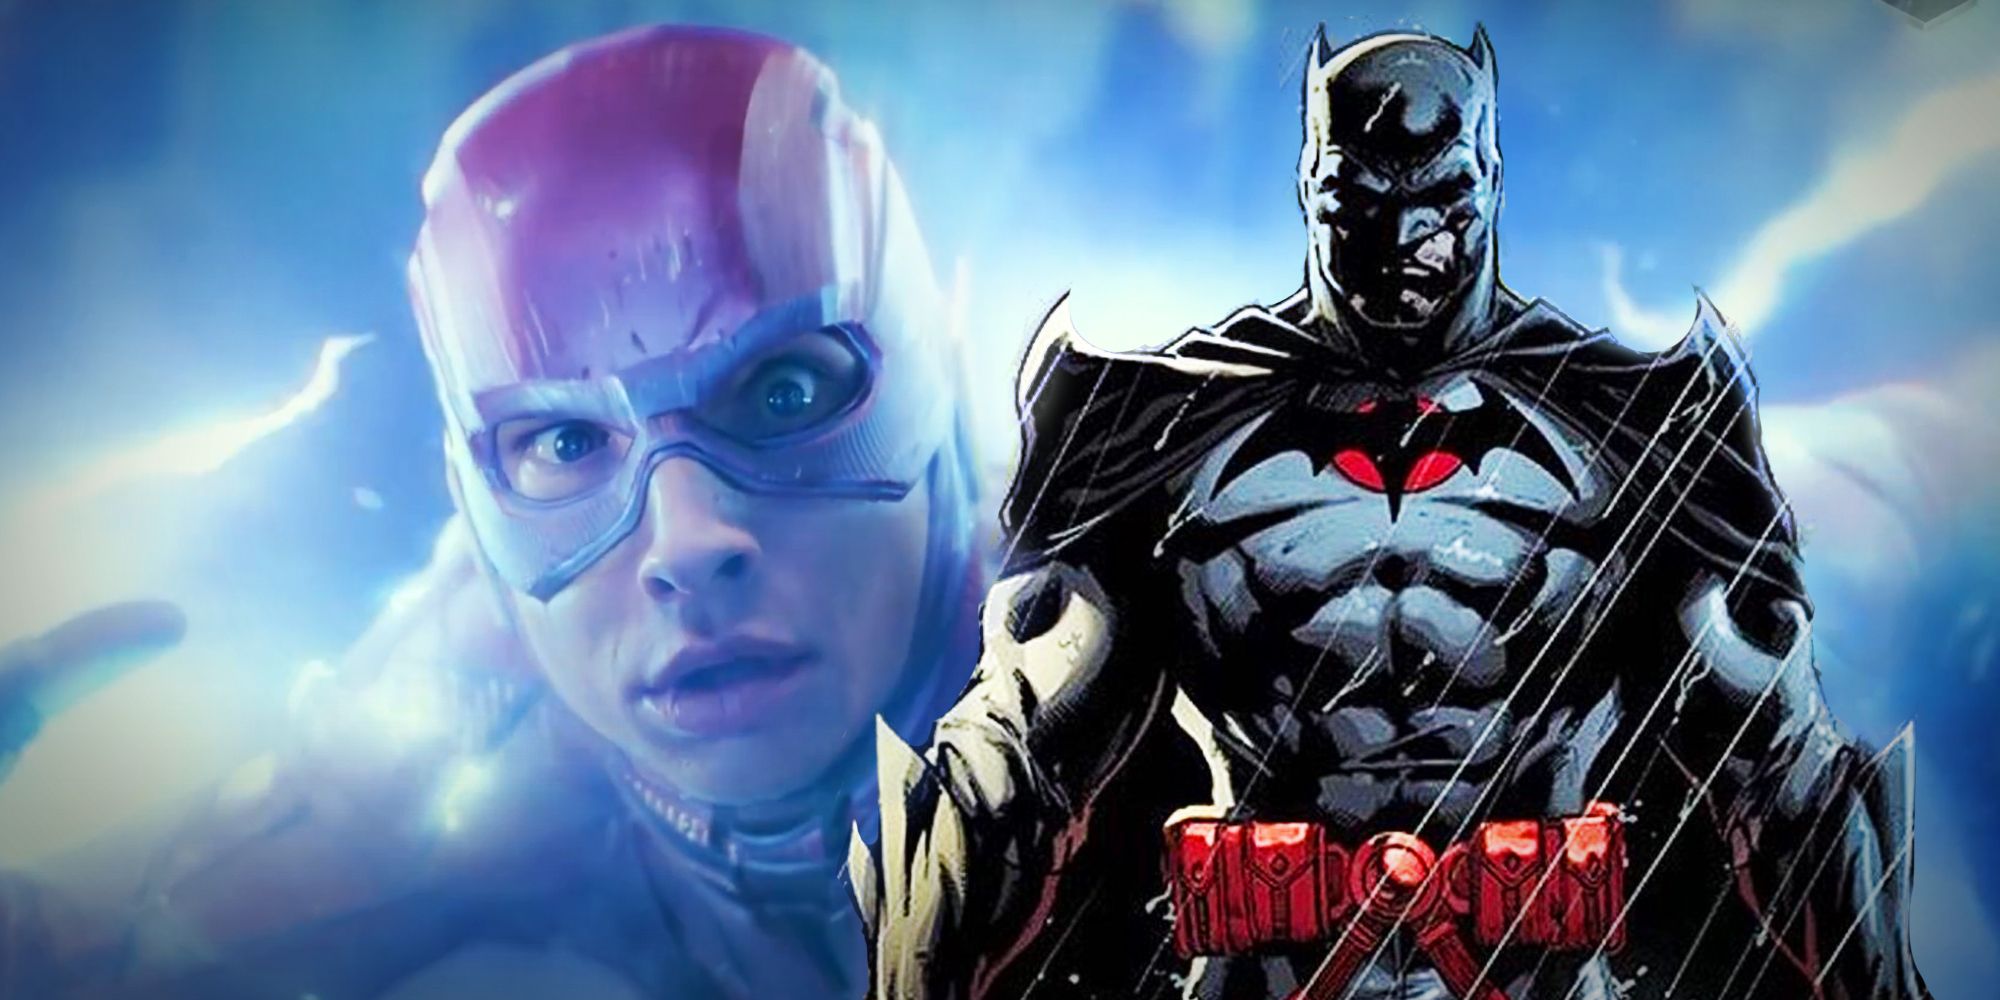 Comic book Flashpoint Batman Ezra Miller as The Flash in Justice League